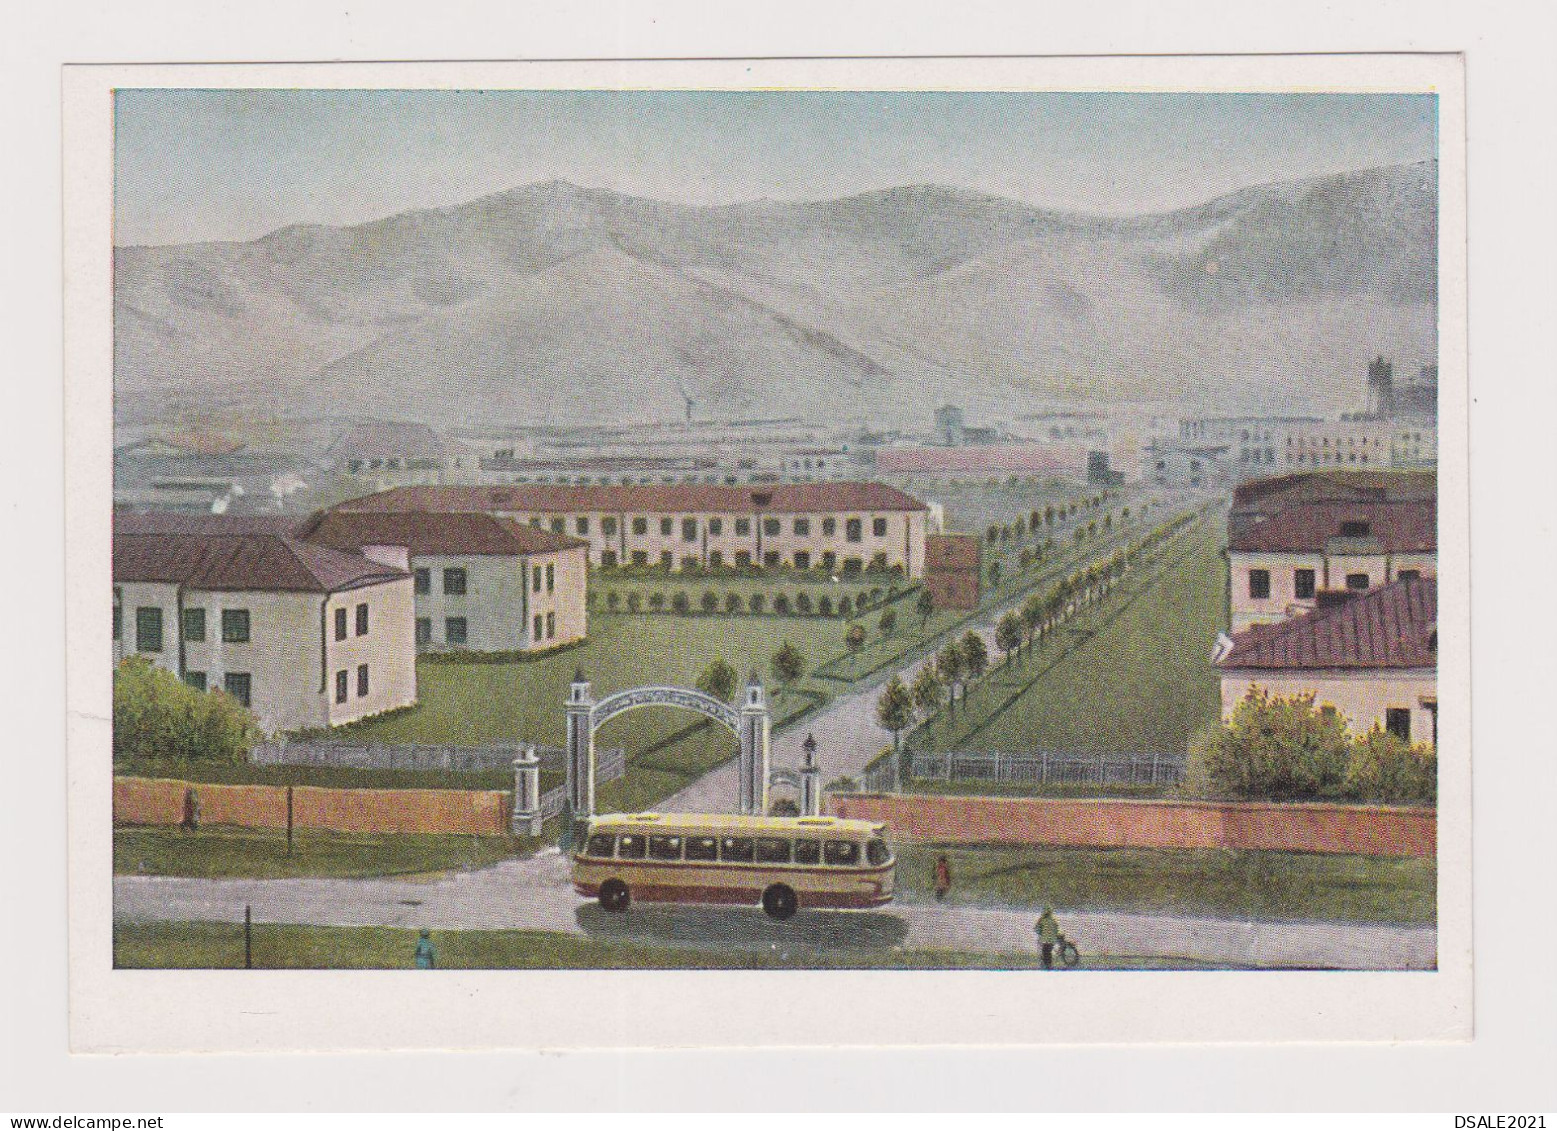 Mongolia Mongolei Mongolie Ulaanbaatar Industrial General Enterprise Vintage 1960s Soviet USSR Photo Postcard (66635) - Mongolia